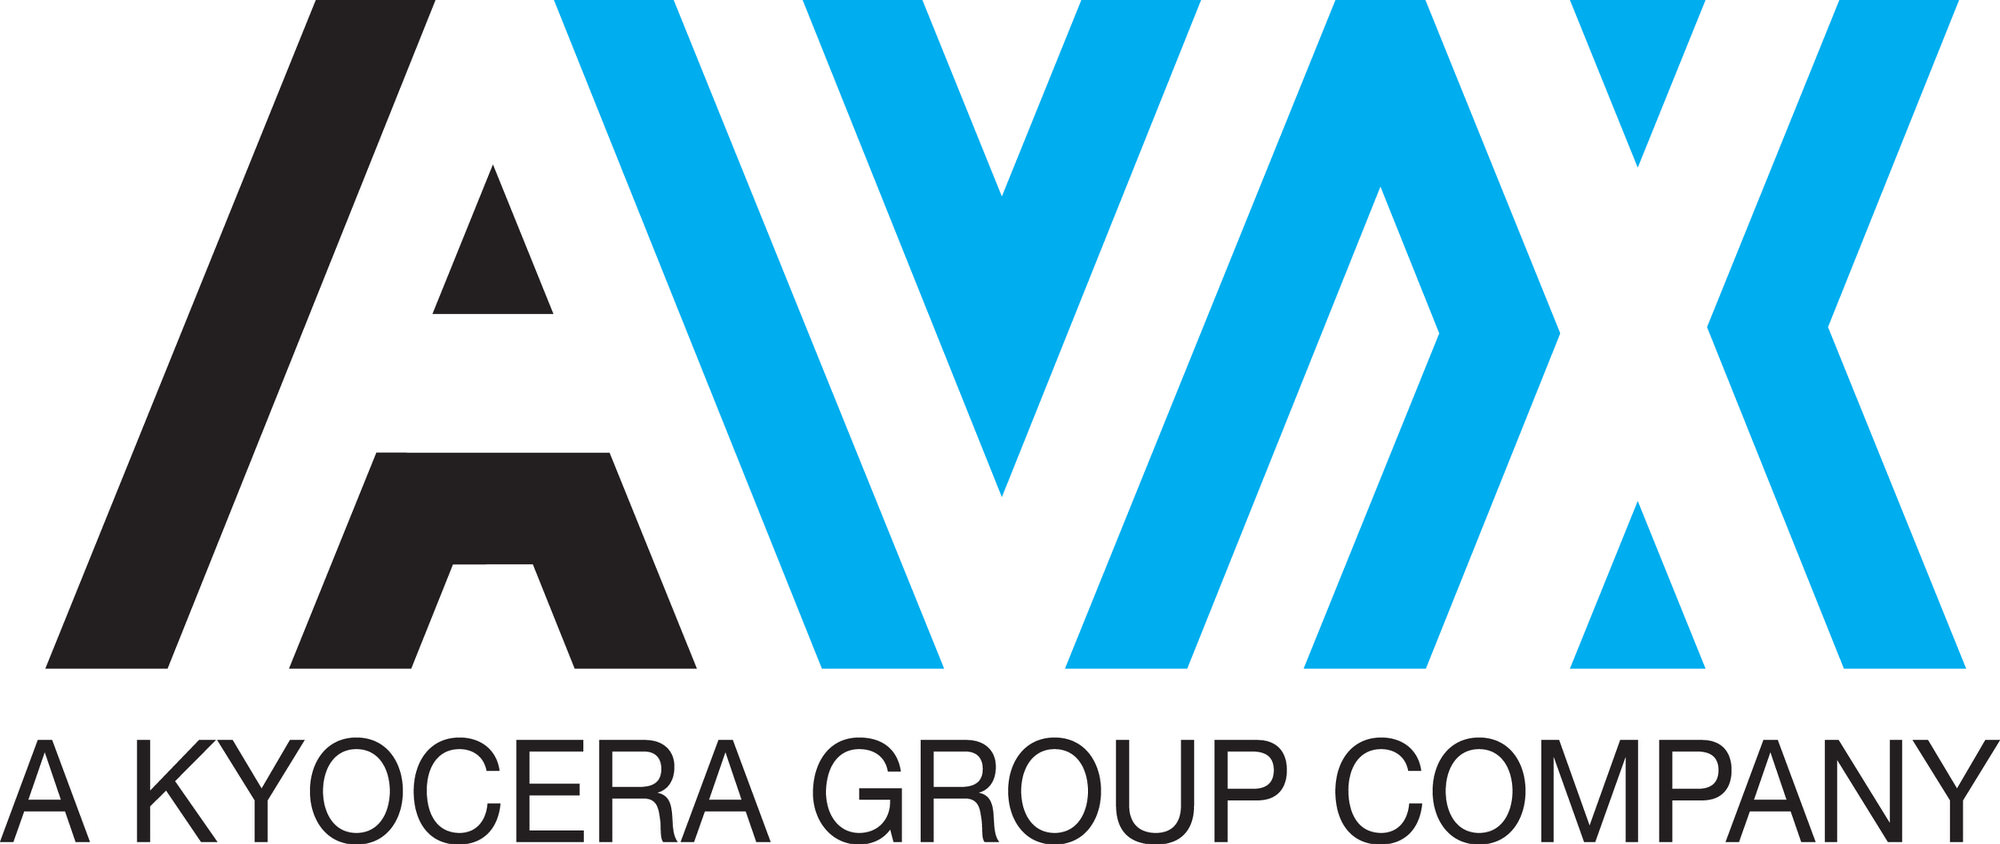 avx-corporate-logo-2015 - Ronald McDonald House Charities of the Carolinas